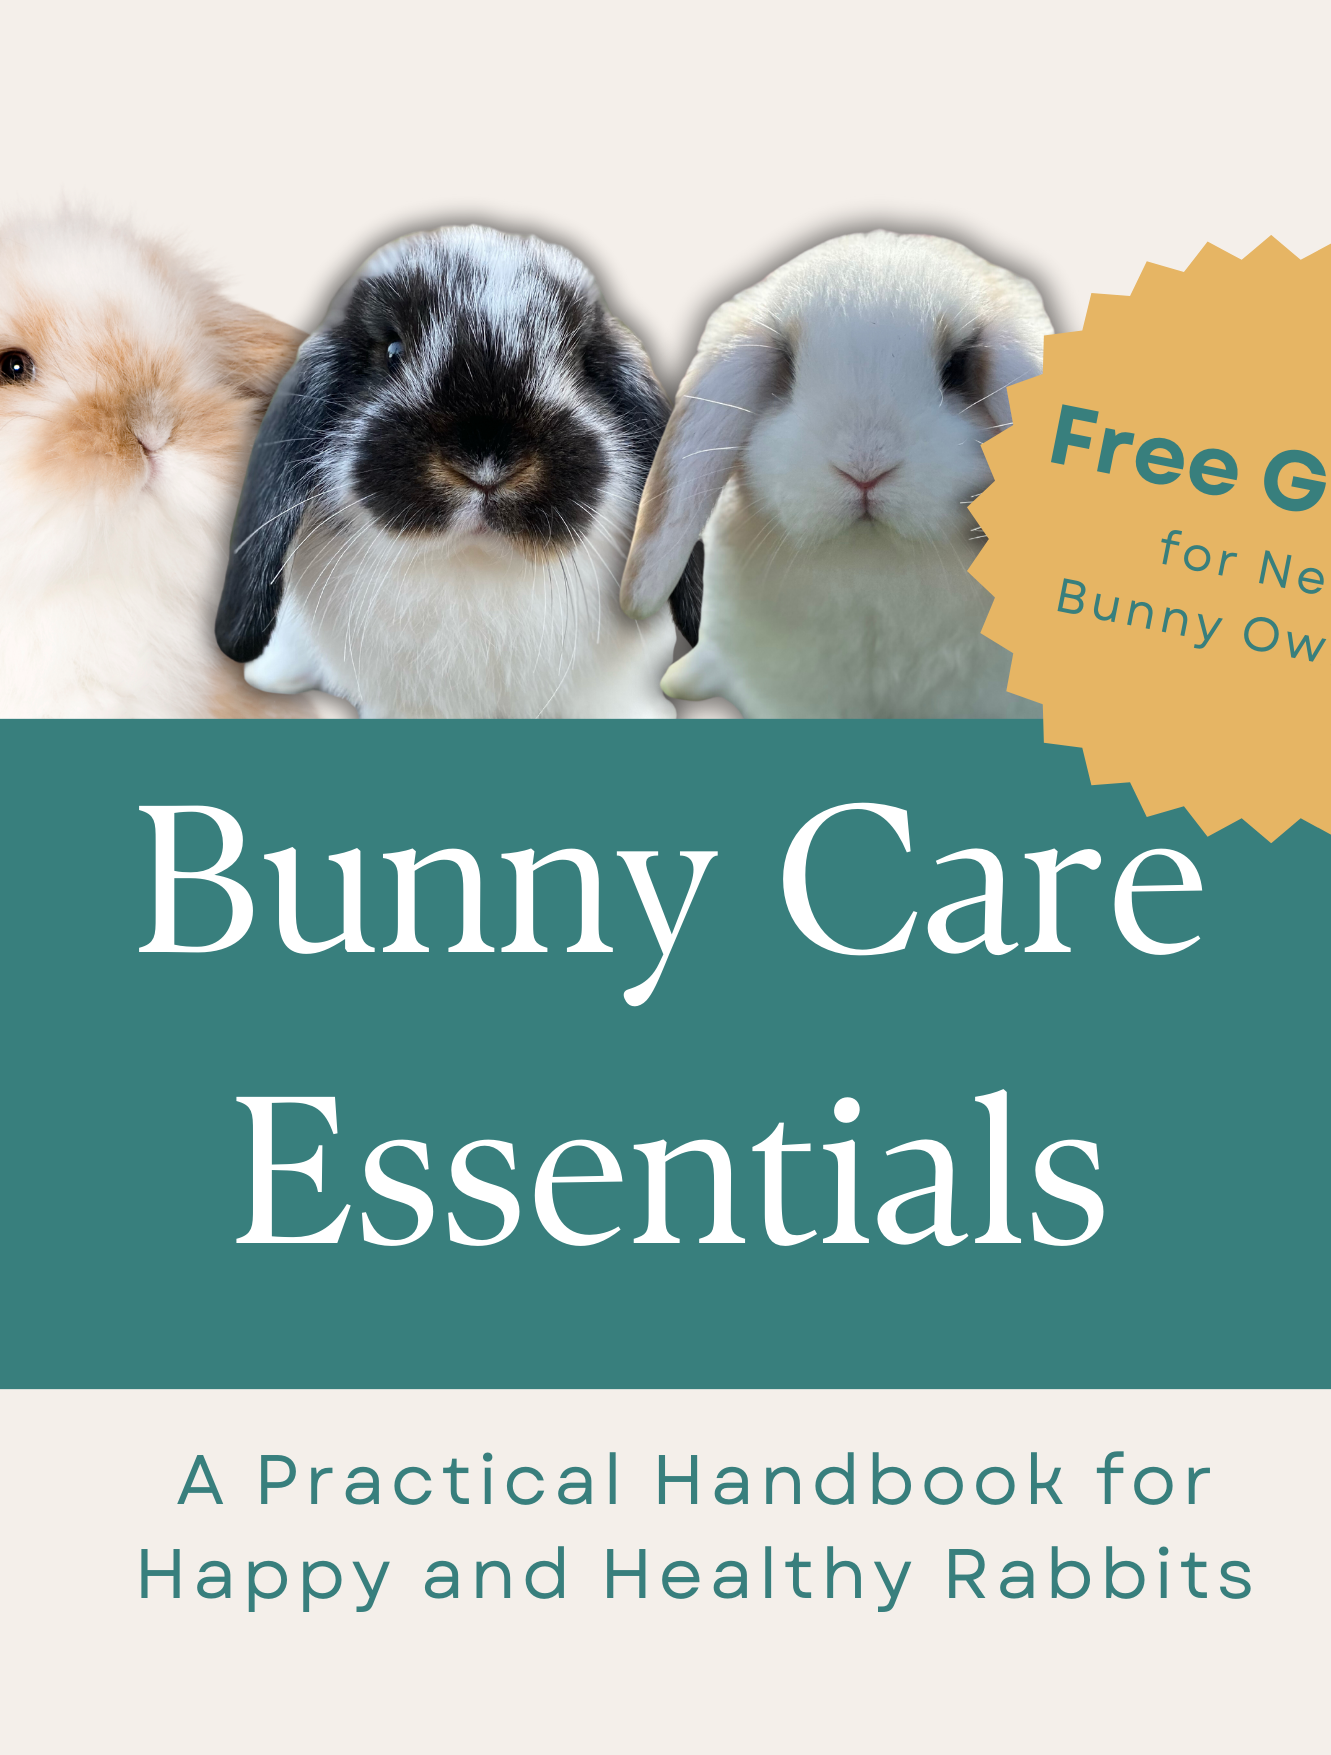 Bunny care Guide